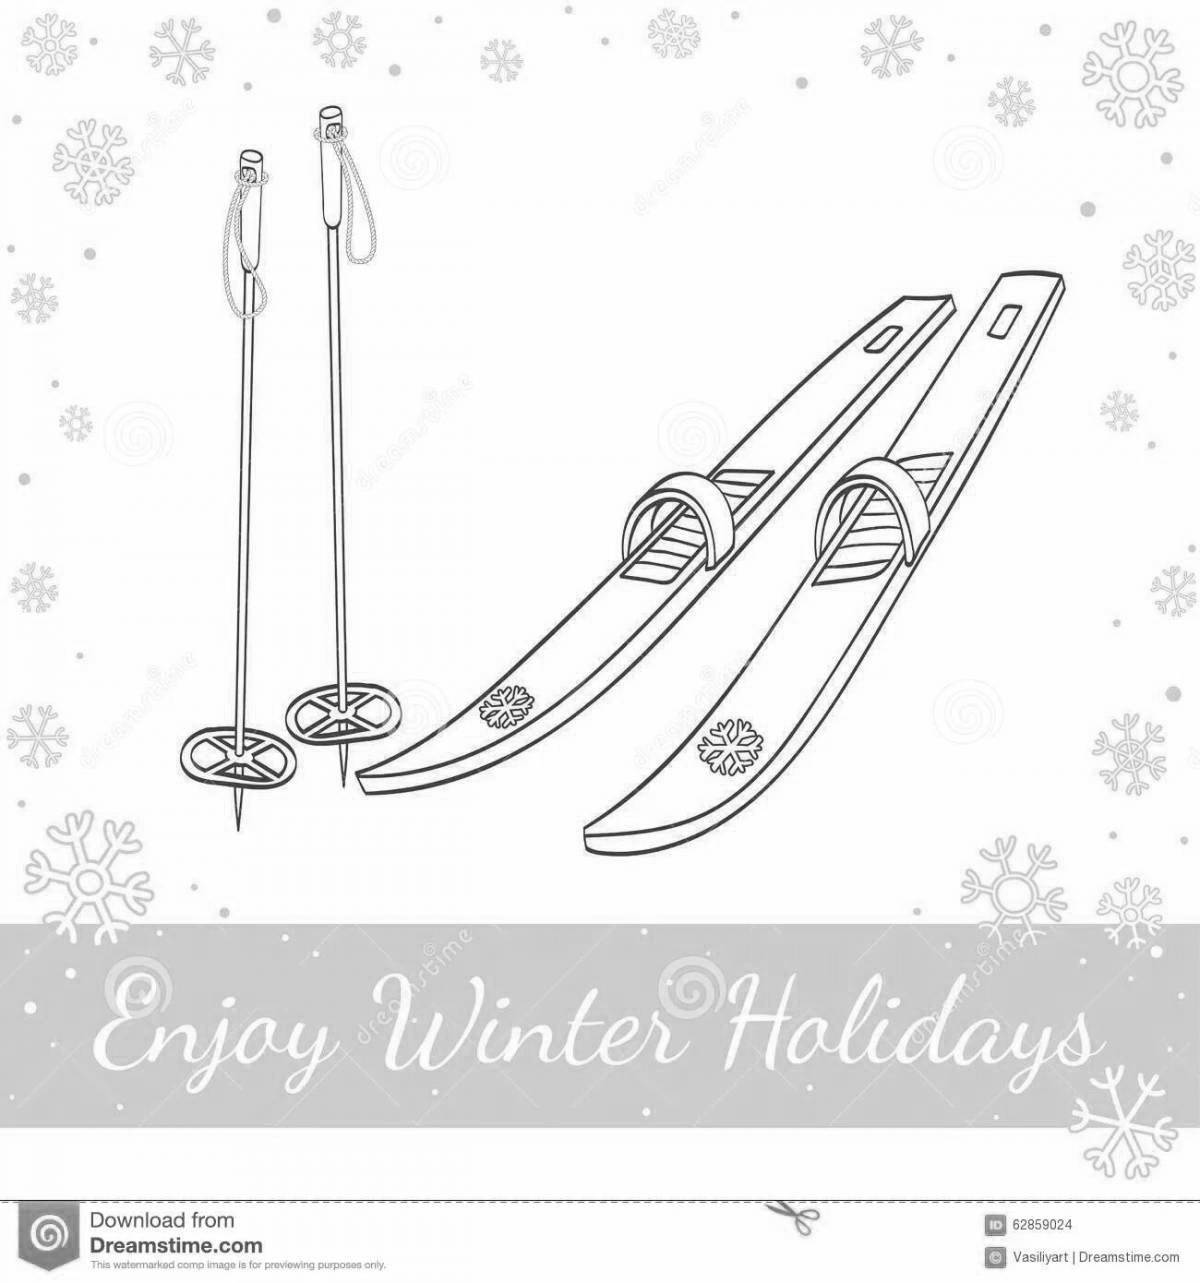 Shiny skis, skates, sleds, coloring book